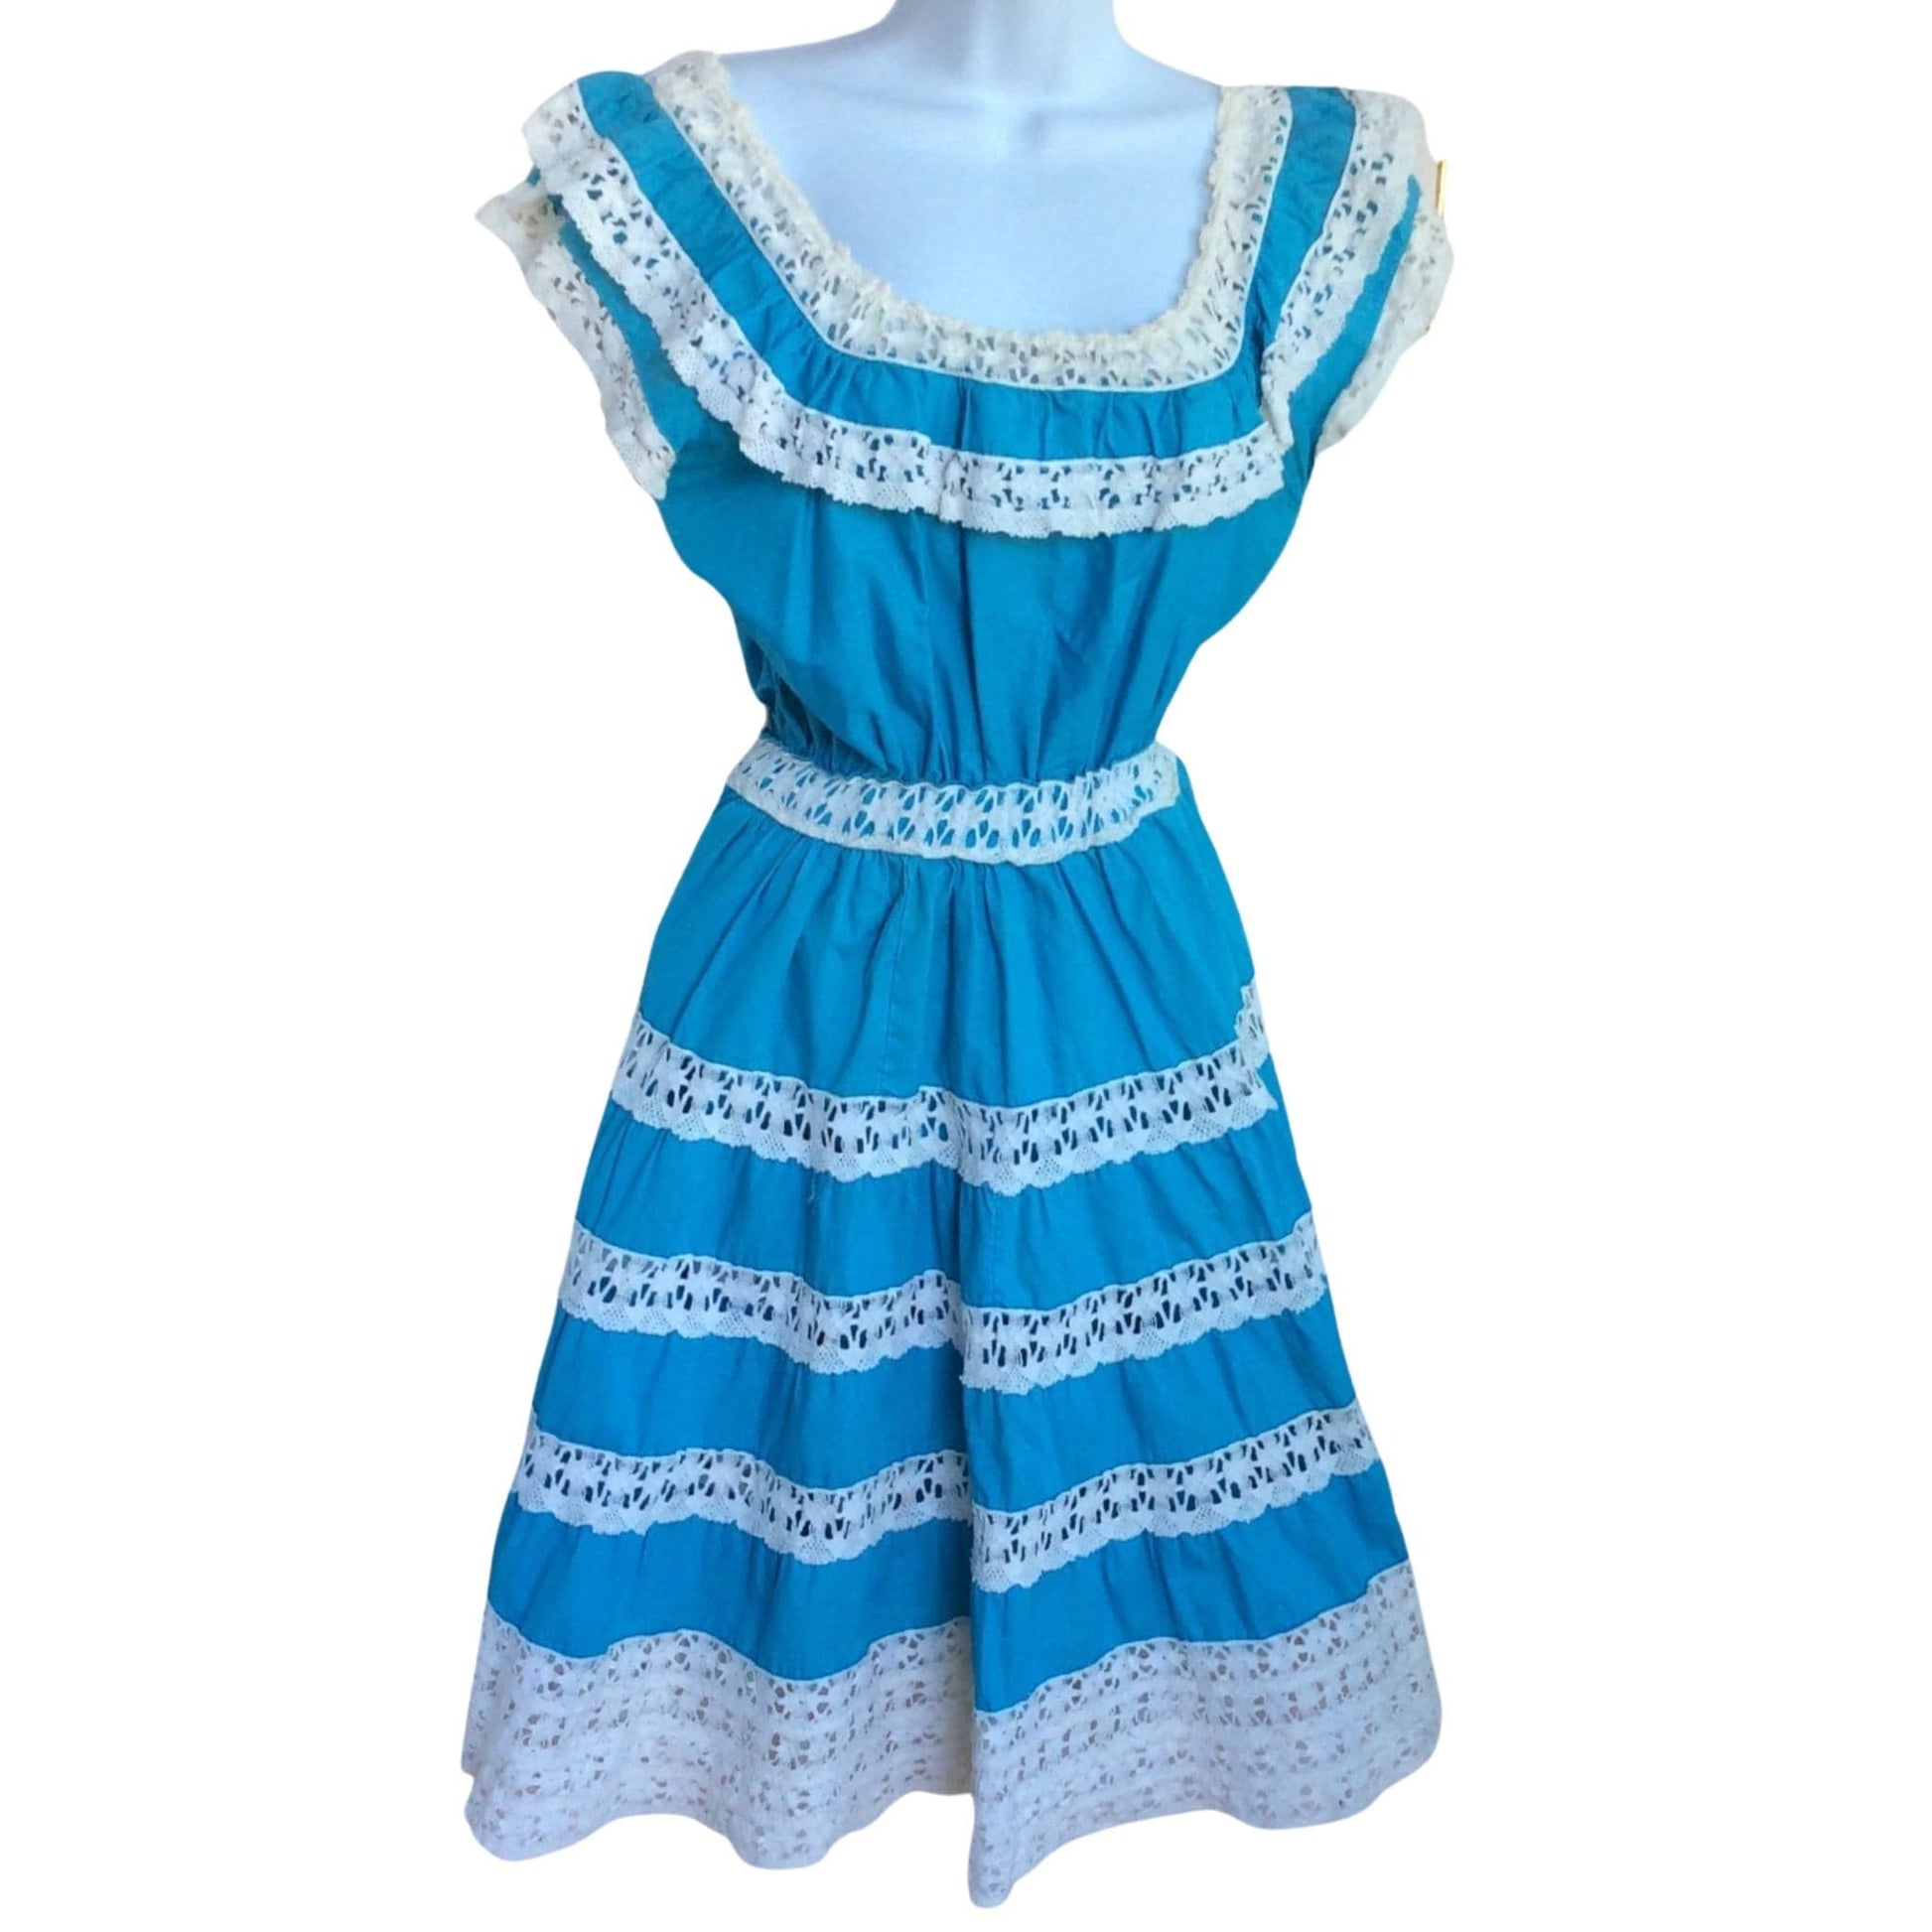 Vintage Square Dance Outfit Small / Blue / Vintage 1950s